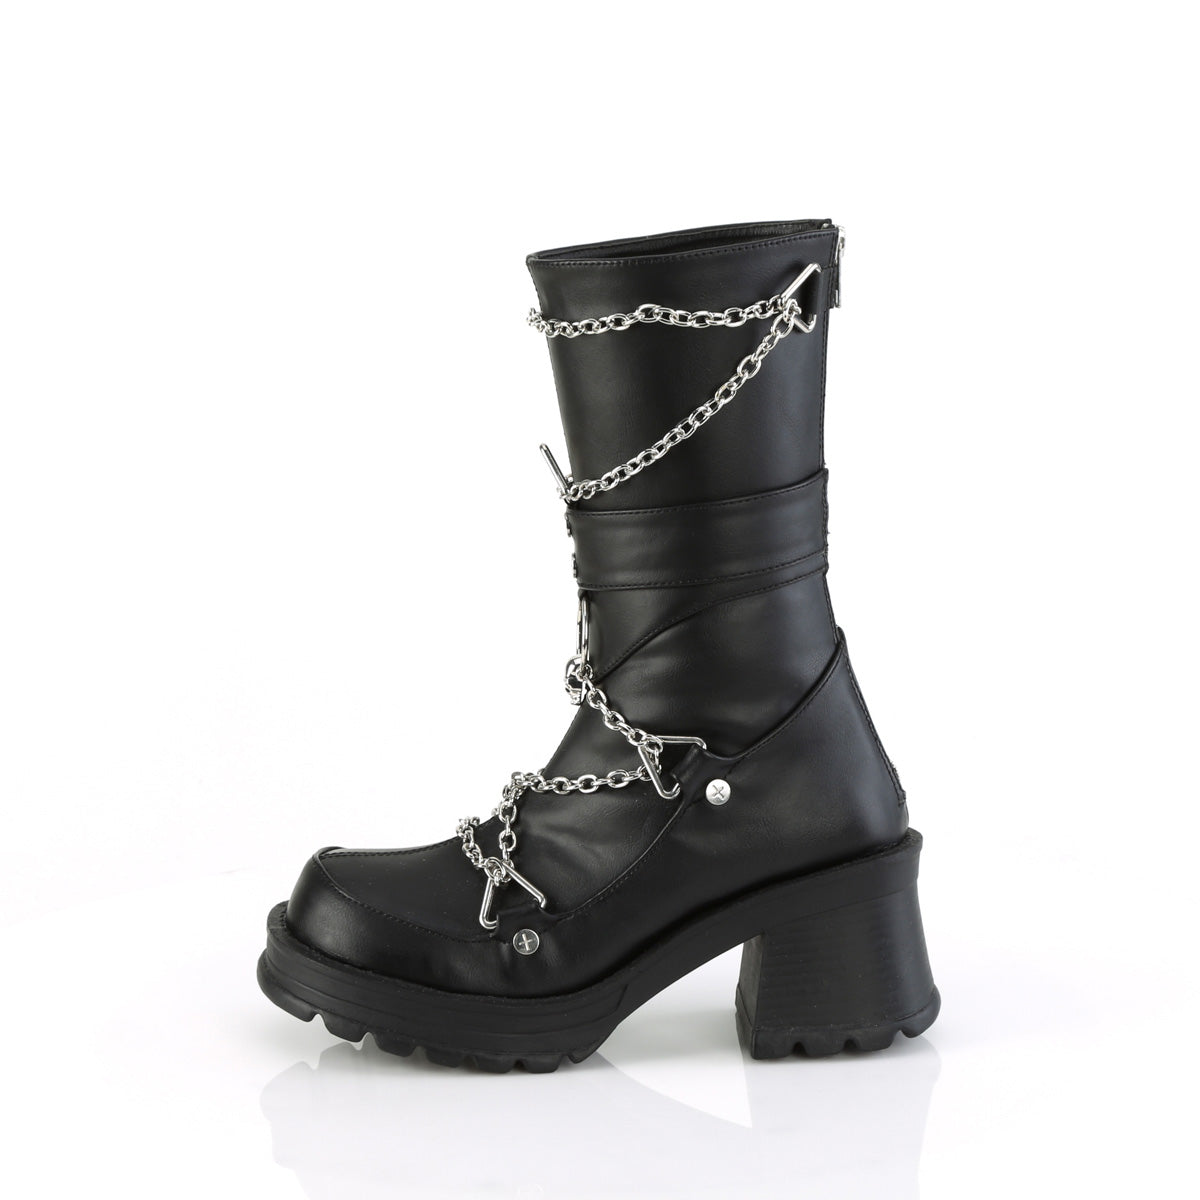 Chain My Punk Black Boots (Demonia Bratty-120)